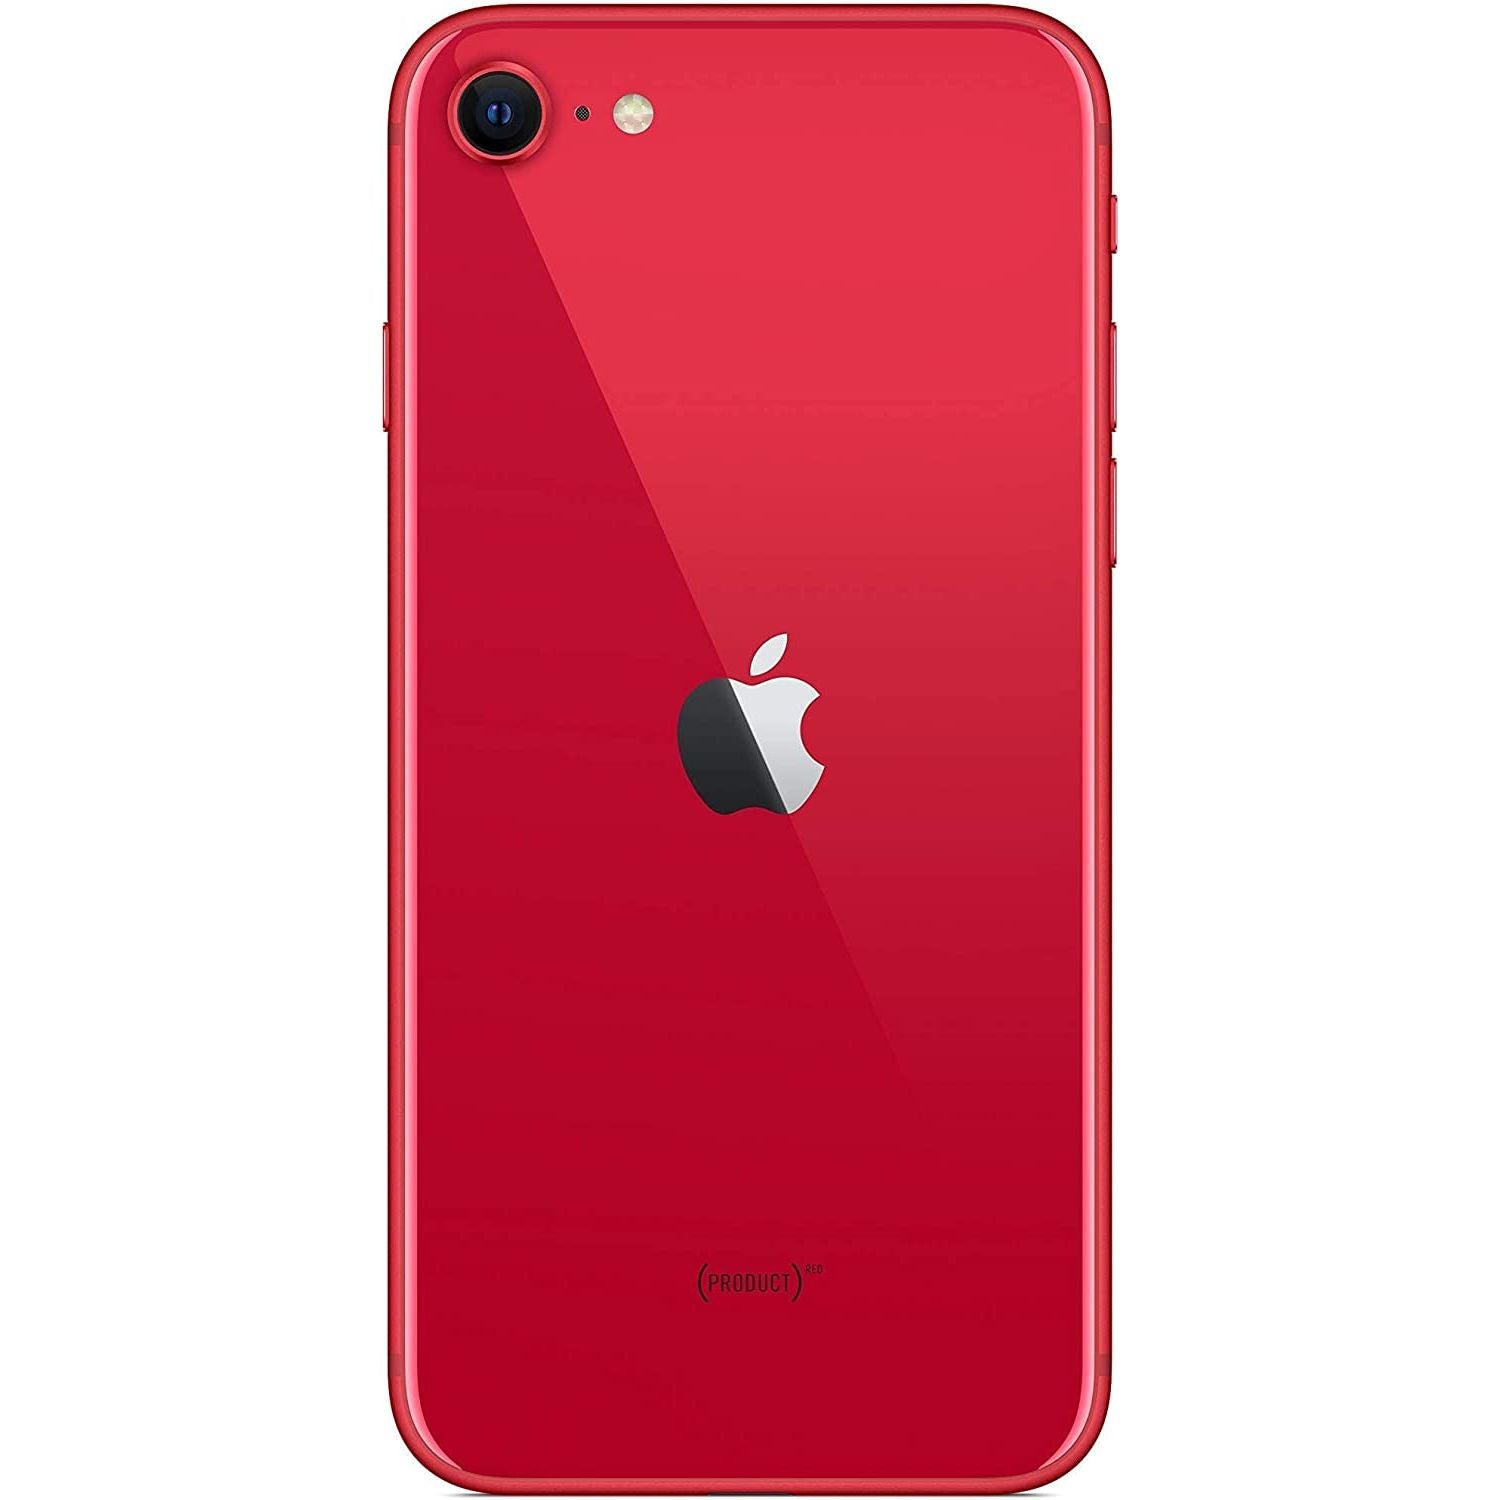 Apple iPhone SE 2nd Generation 128GB (Unlocked) Red